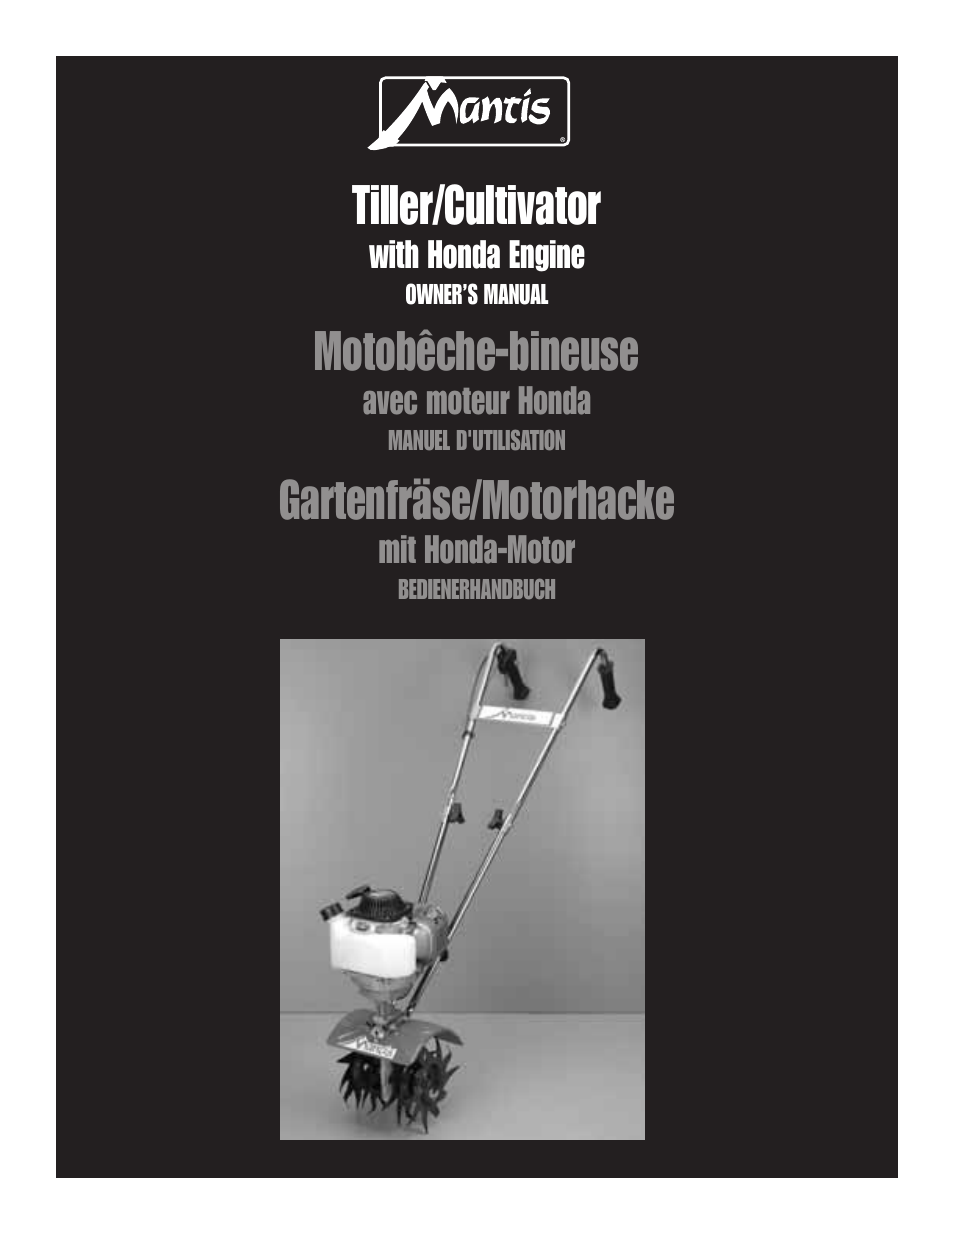 Tiller/Cultivator